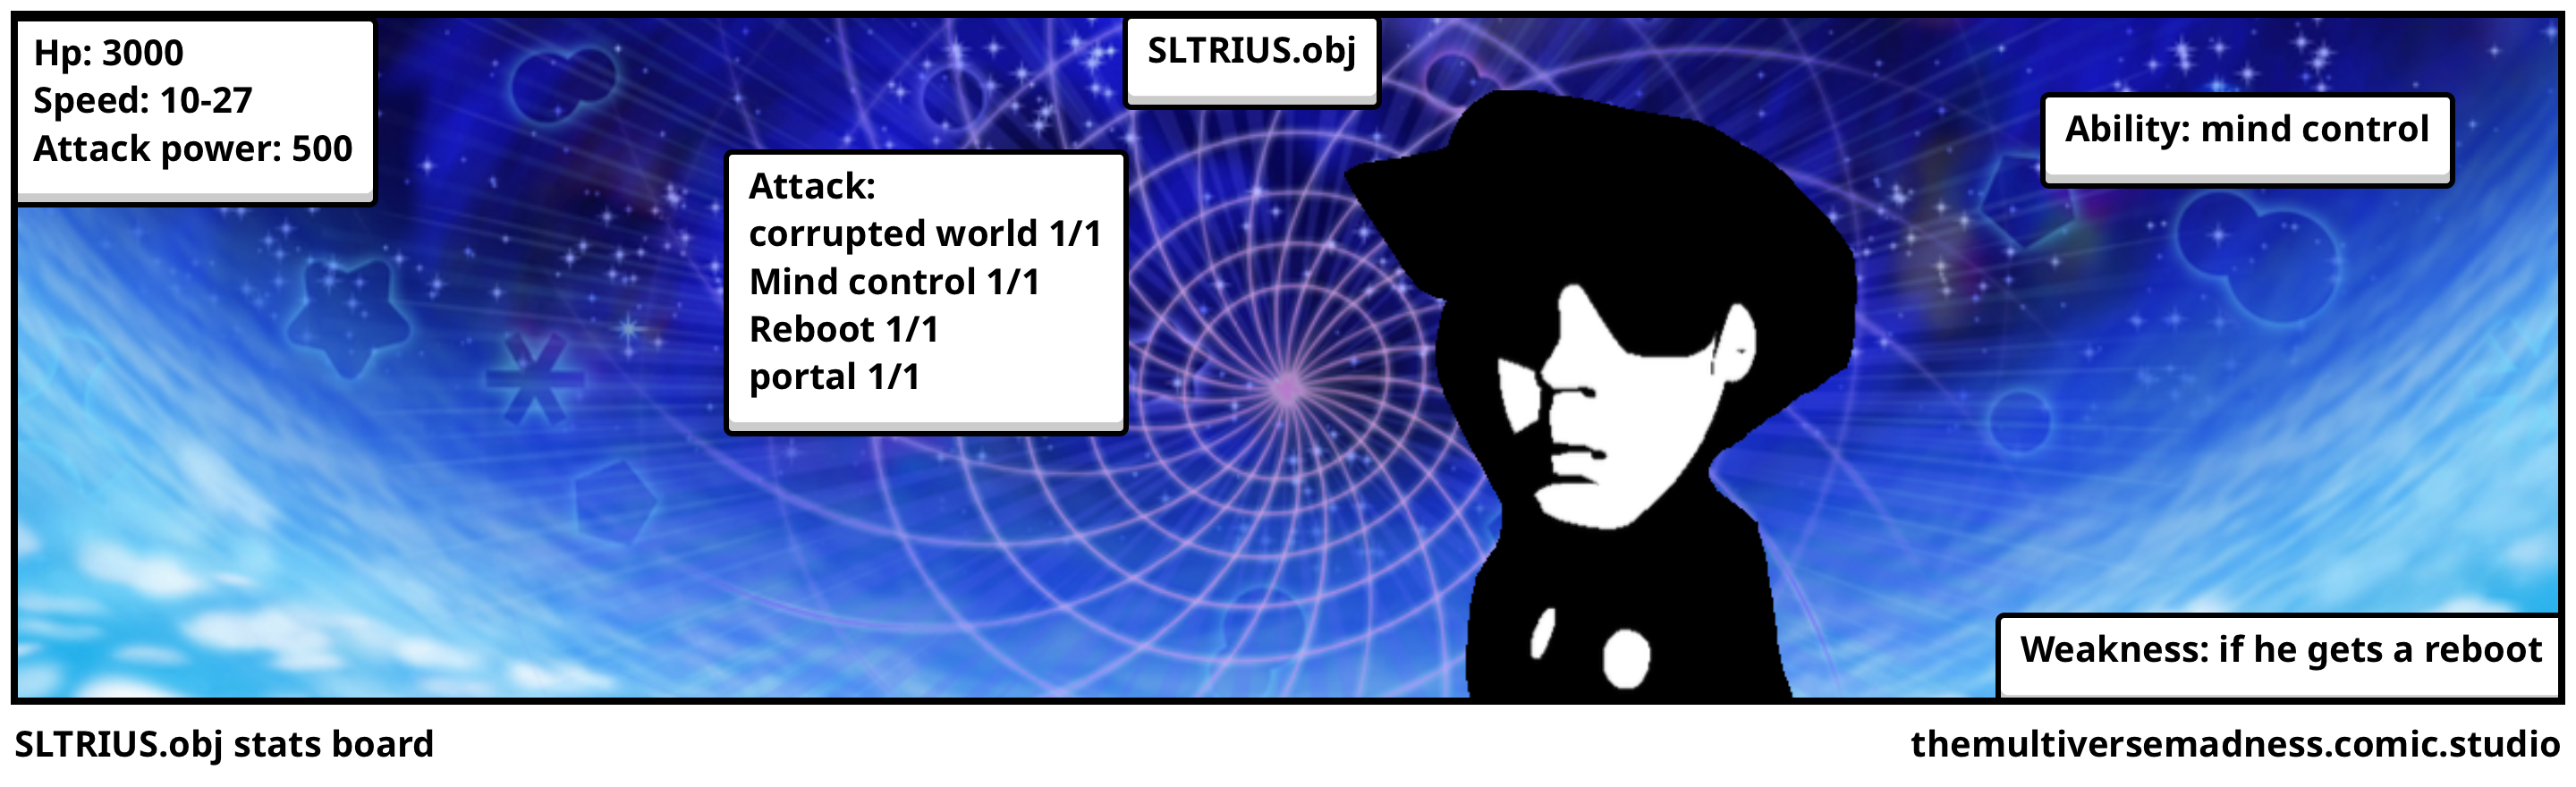 SLTRIUS.obj stats board